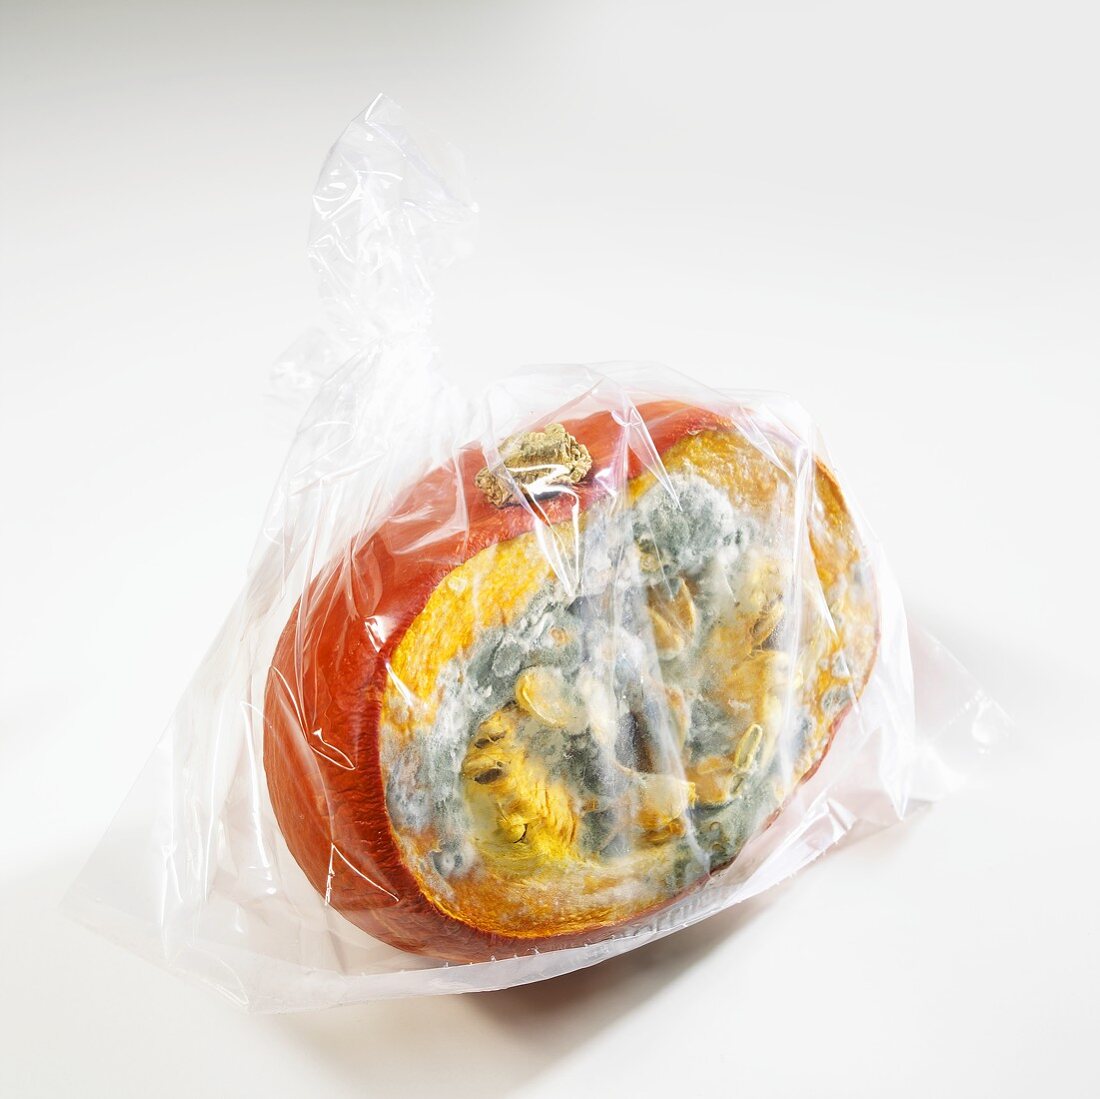 Mouldy pumpkin in plastic bag